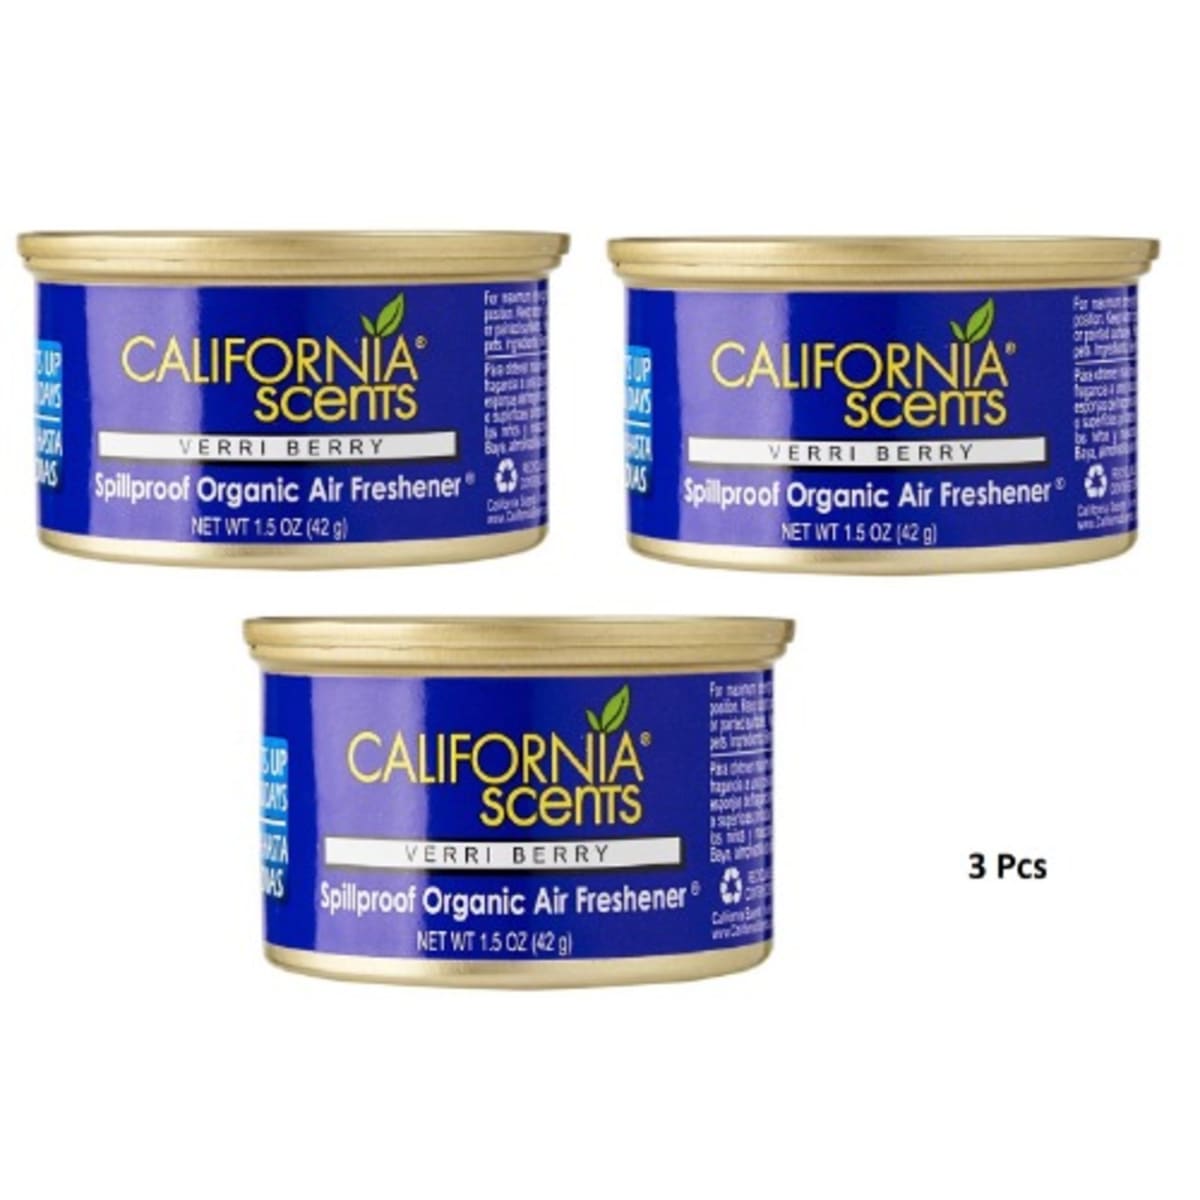 California Scents Air Freshener - Verri Berry - 42g X 3pieces